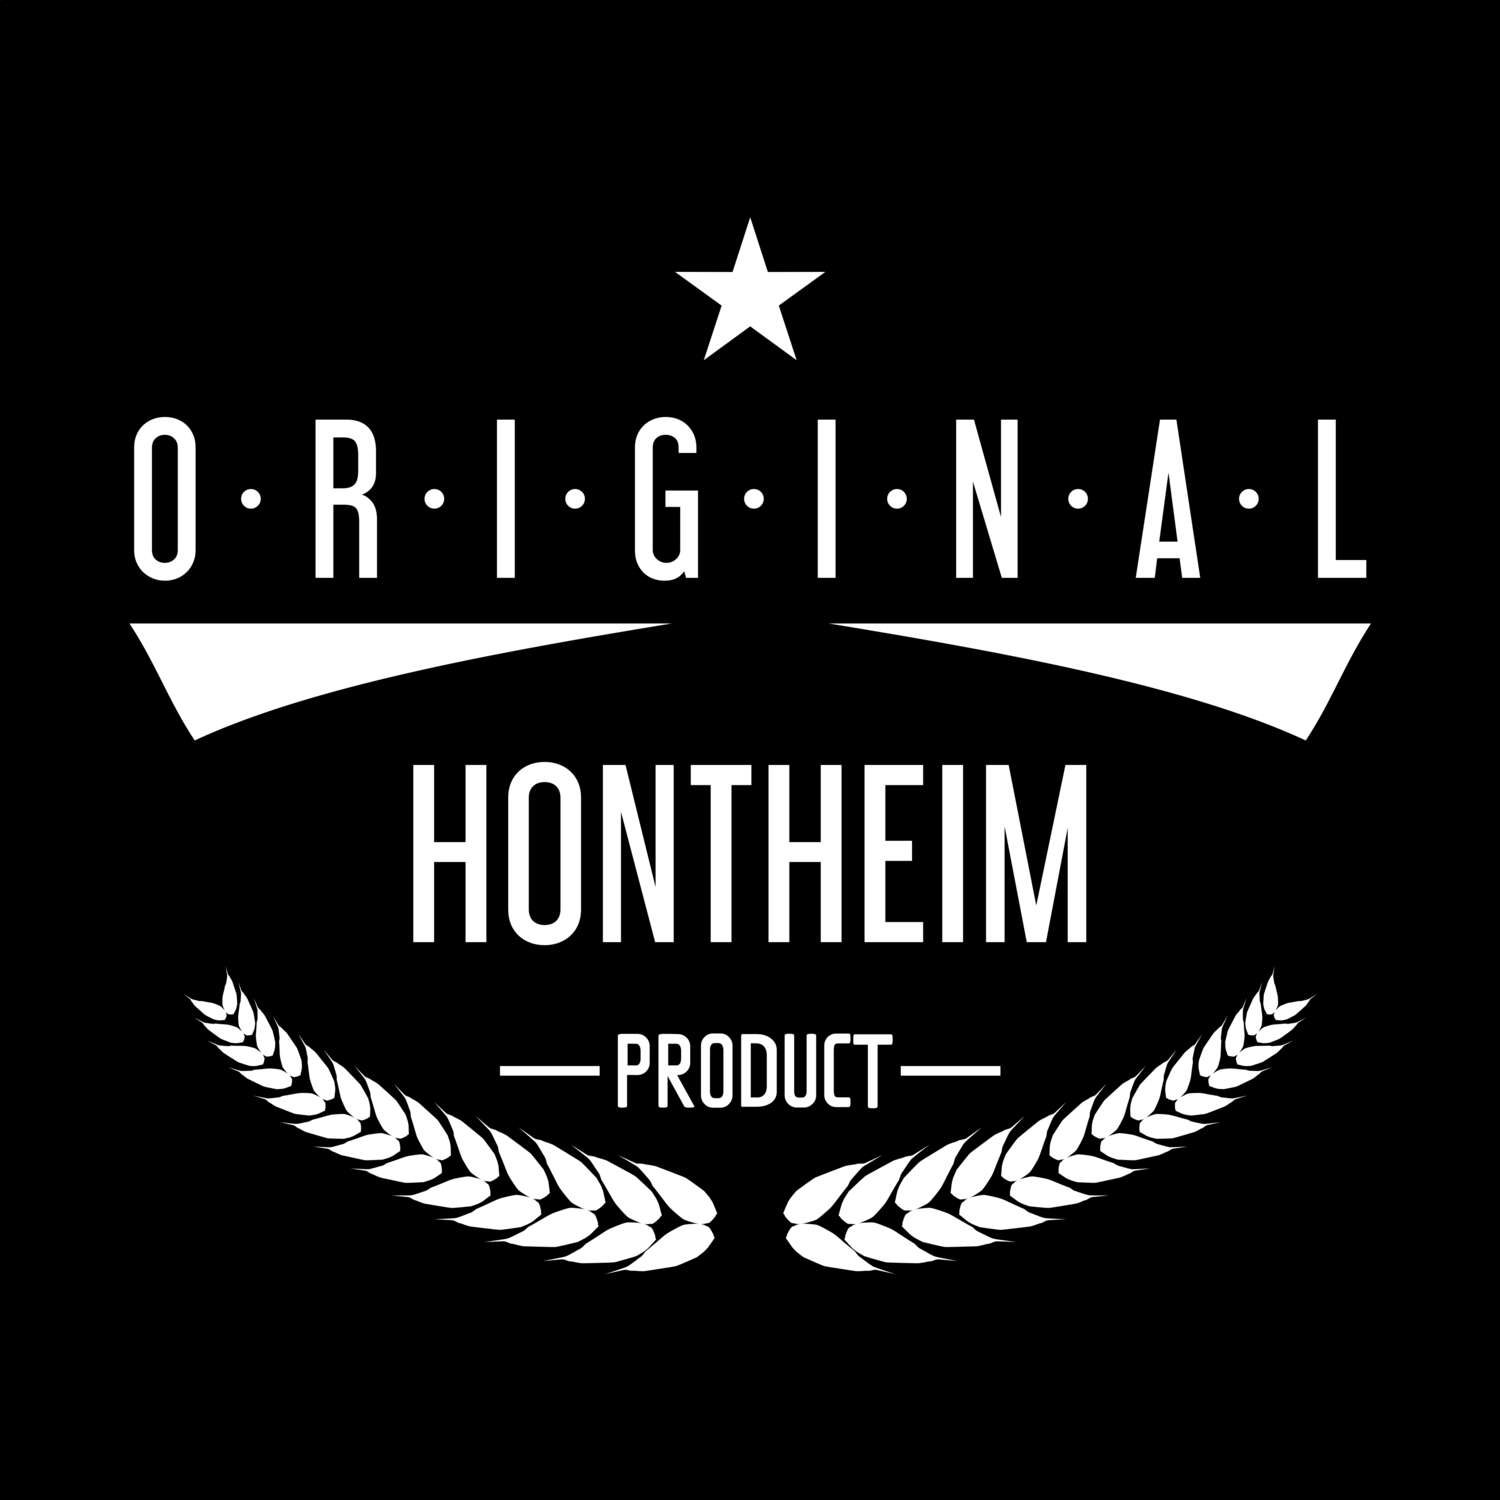 Hontheim T-Shirt »Original Product«